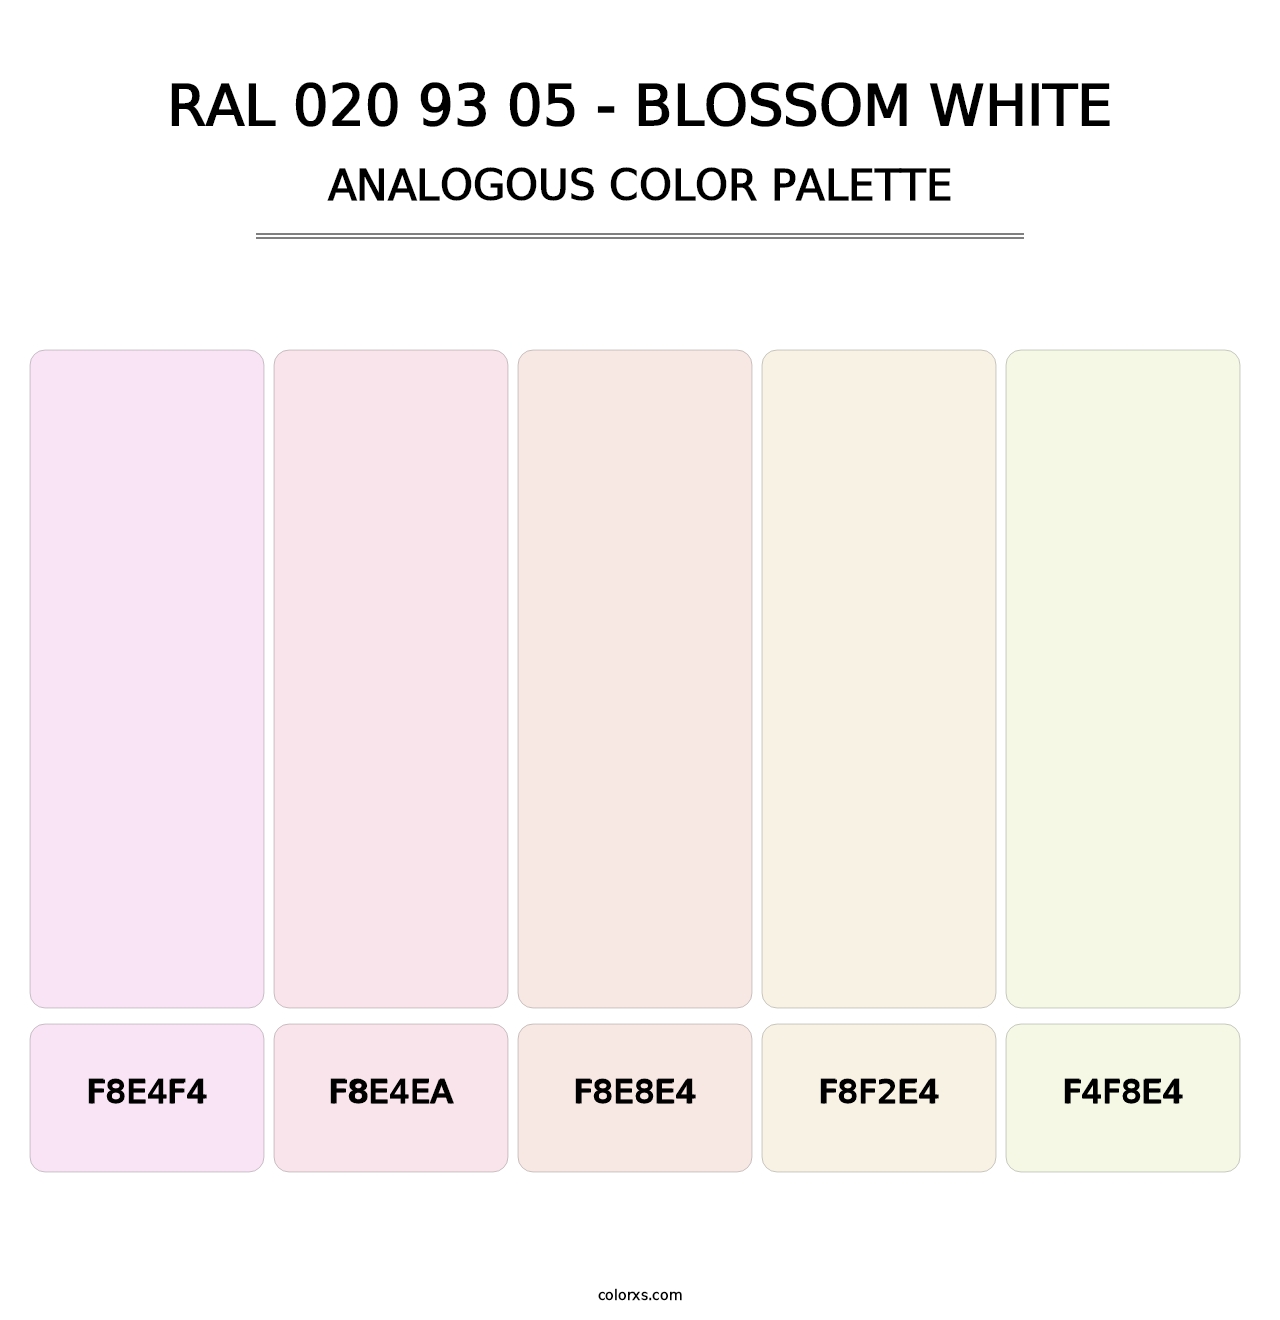 RAL 020 93 05 - Blossom White - Analogous Color Palette